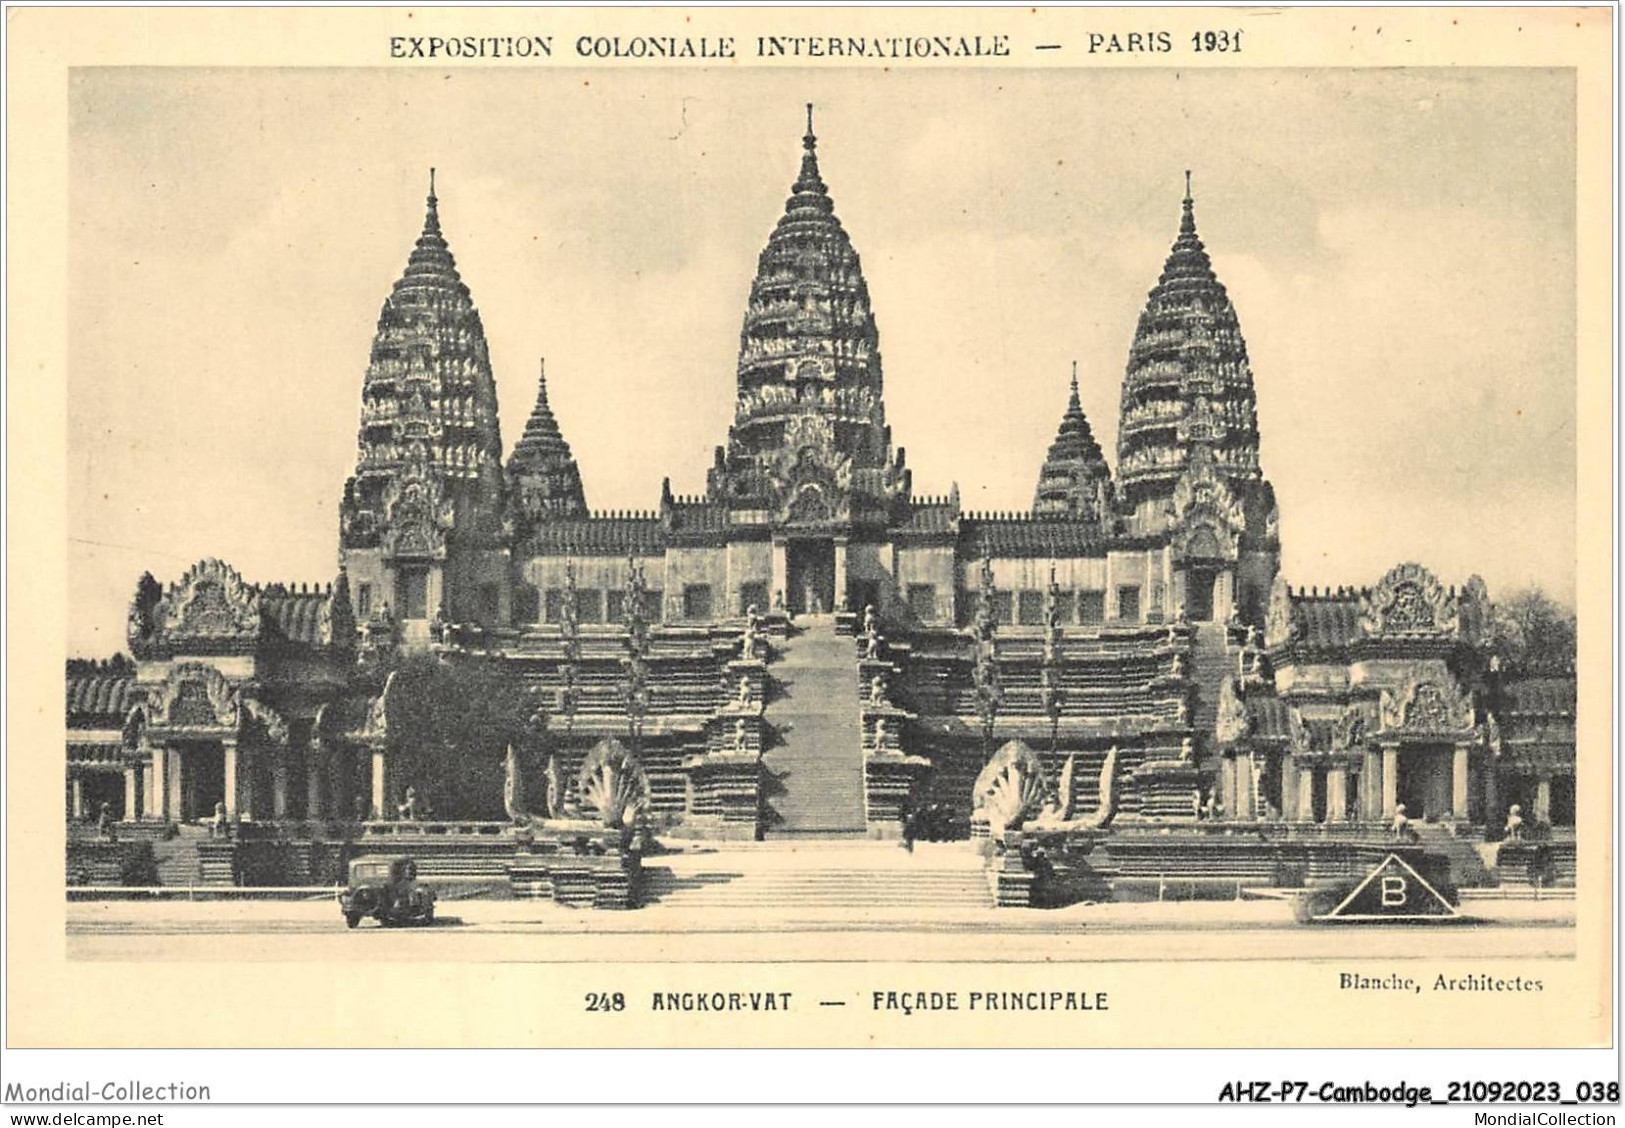 AHZP7-CAMBODGE-0615 - EXPOSITION COLONIALE INTERNATIONALE - PARIS 1931 - ANGKOR-VAT - FACADE PRINCIPALE - Cambodja